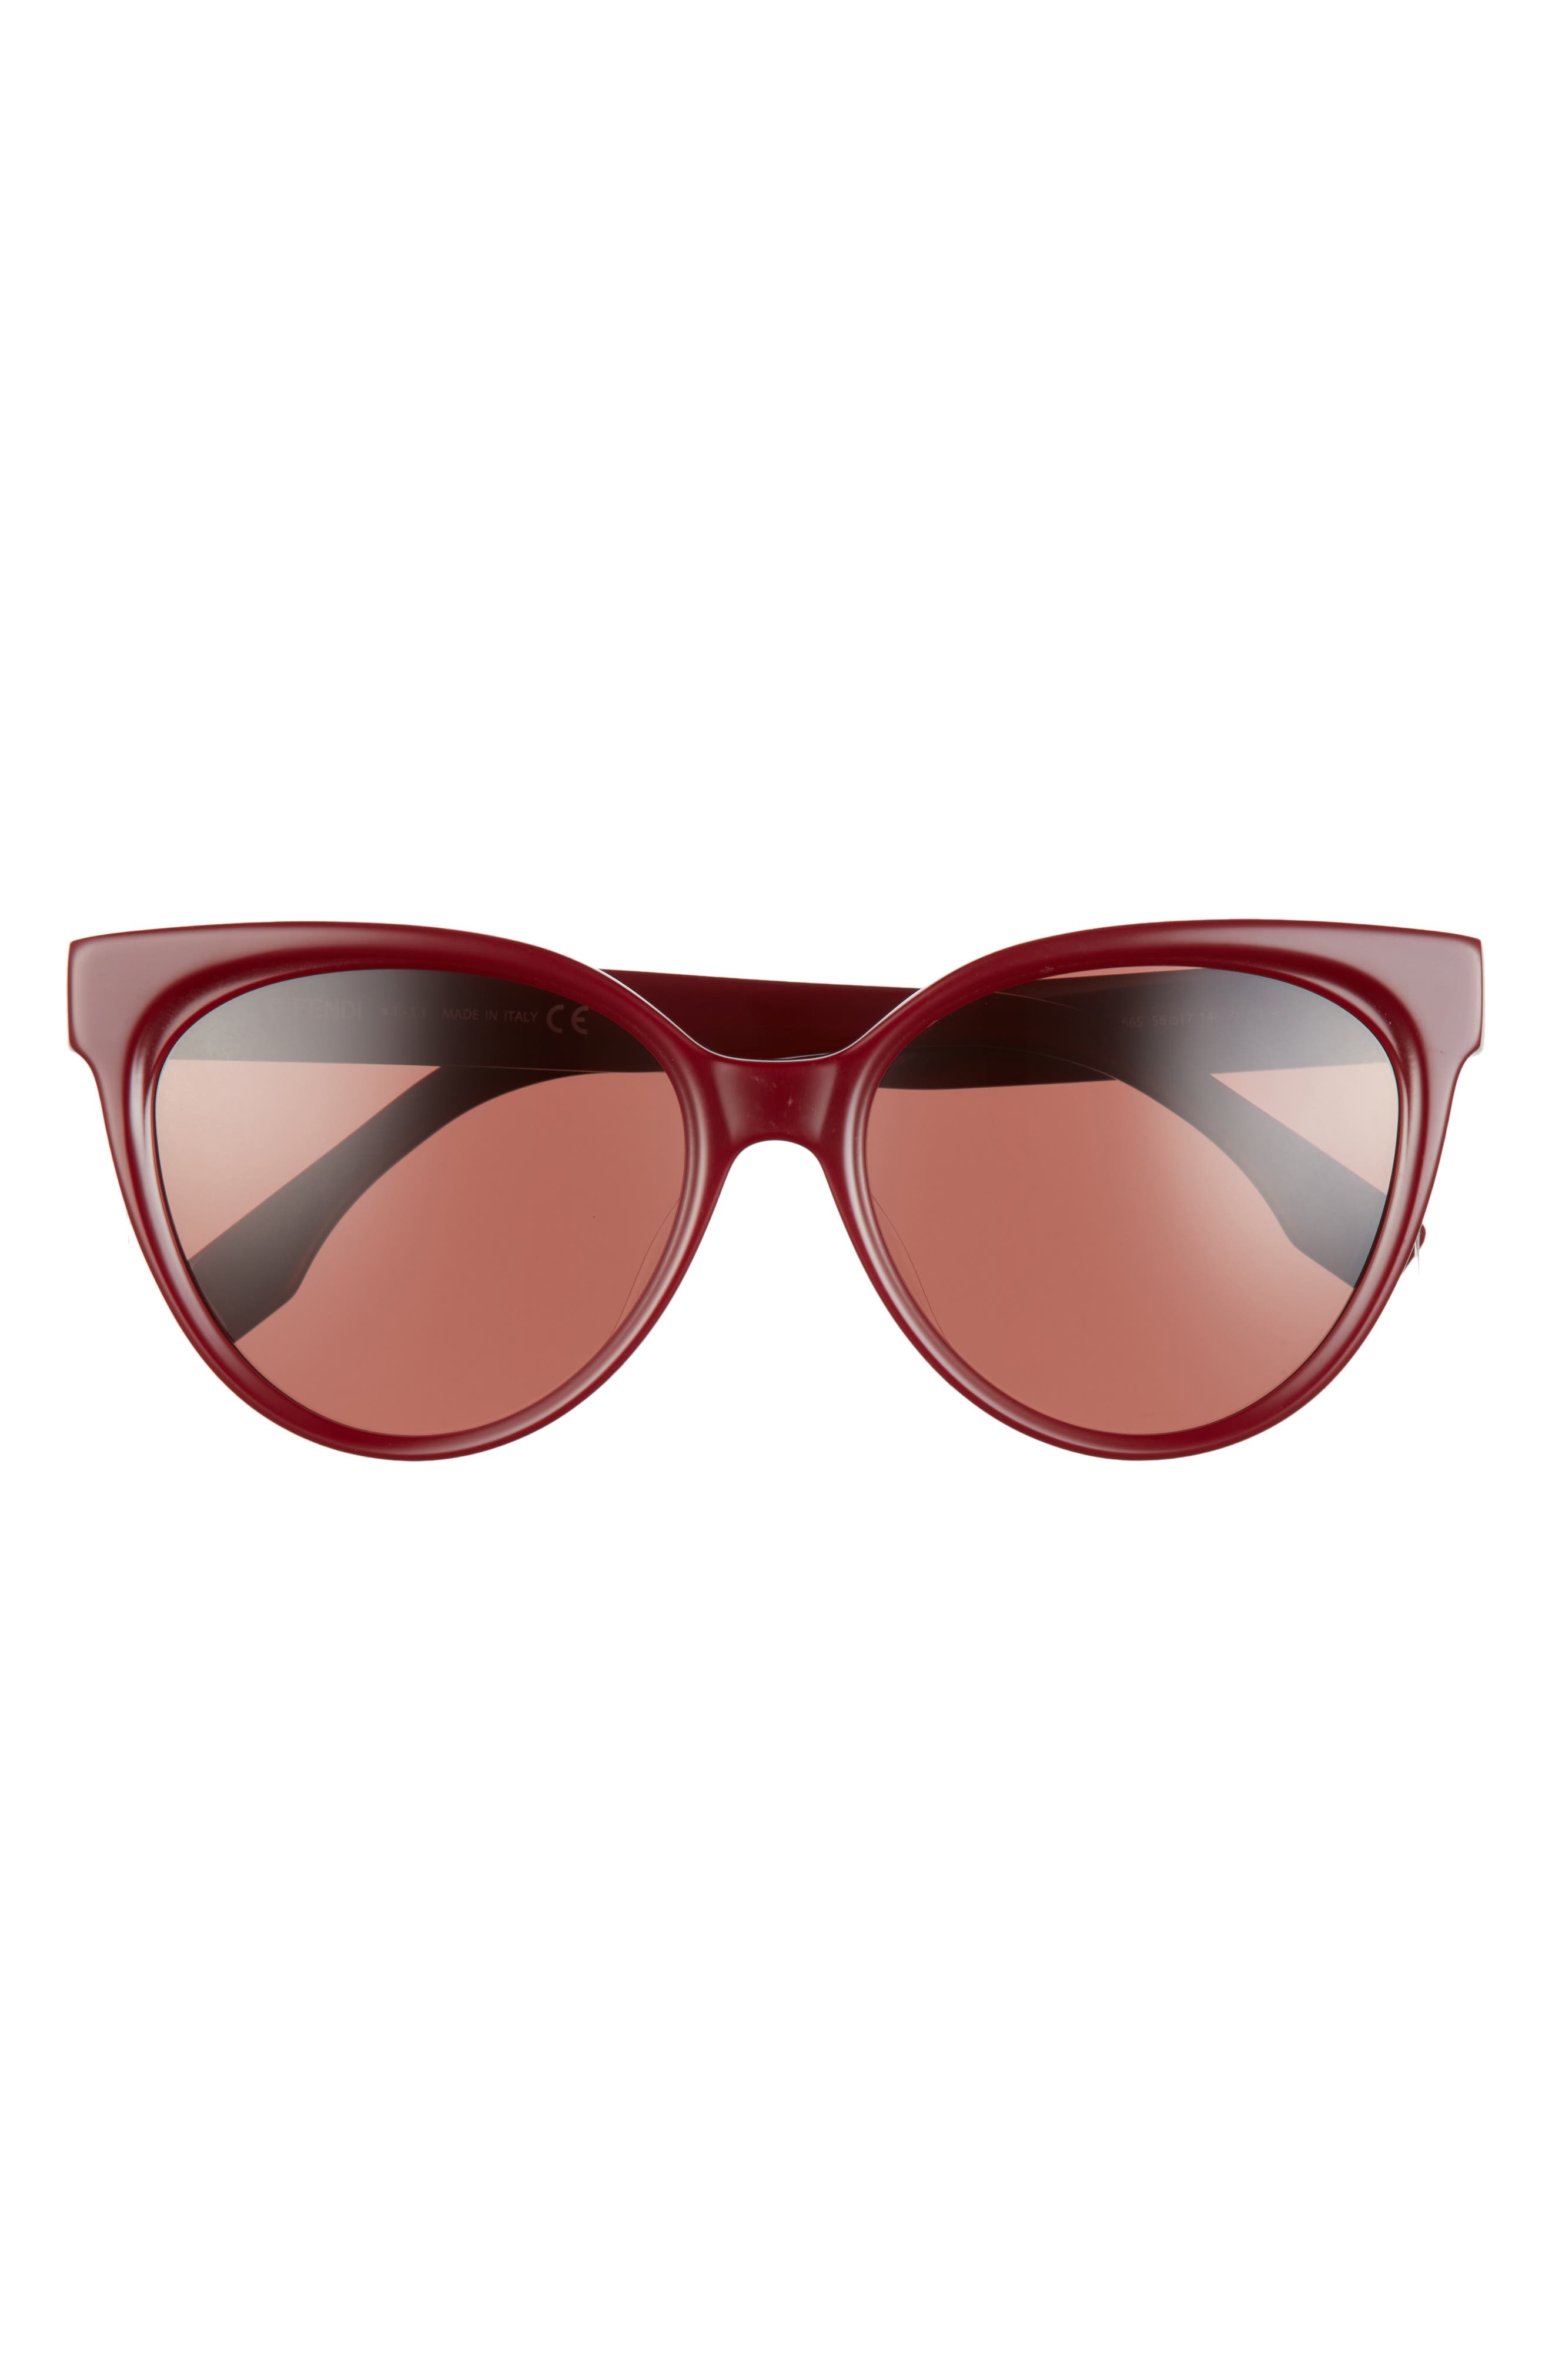 Fendi 56mm Cat Eye Sunglasses in Shiny Red /Bordeaux at Nordstrom